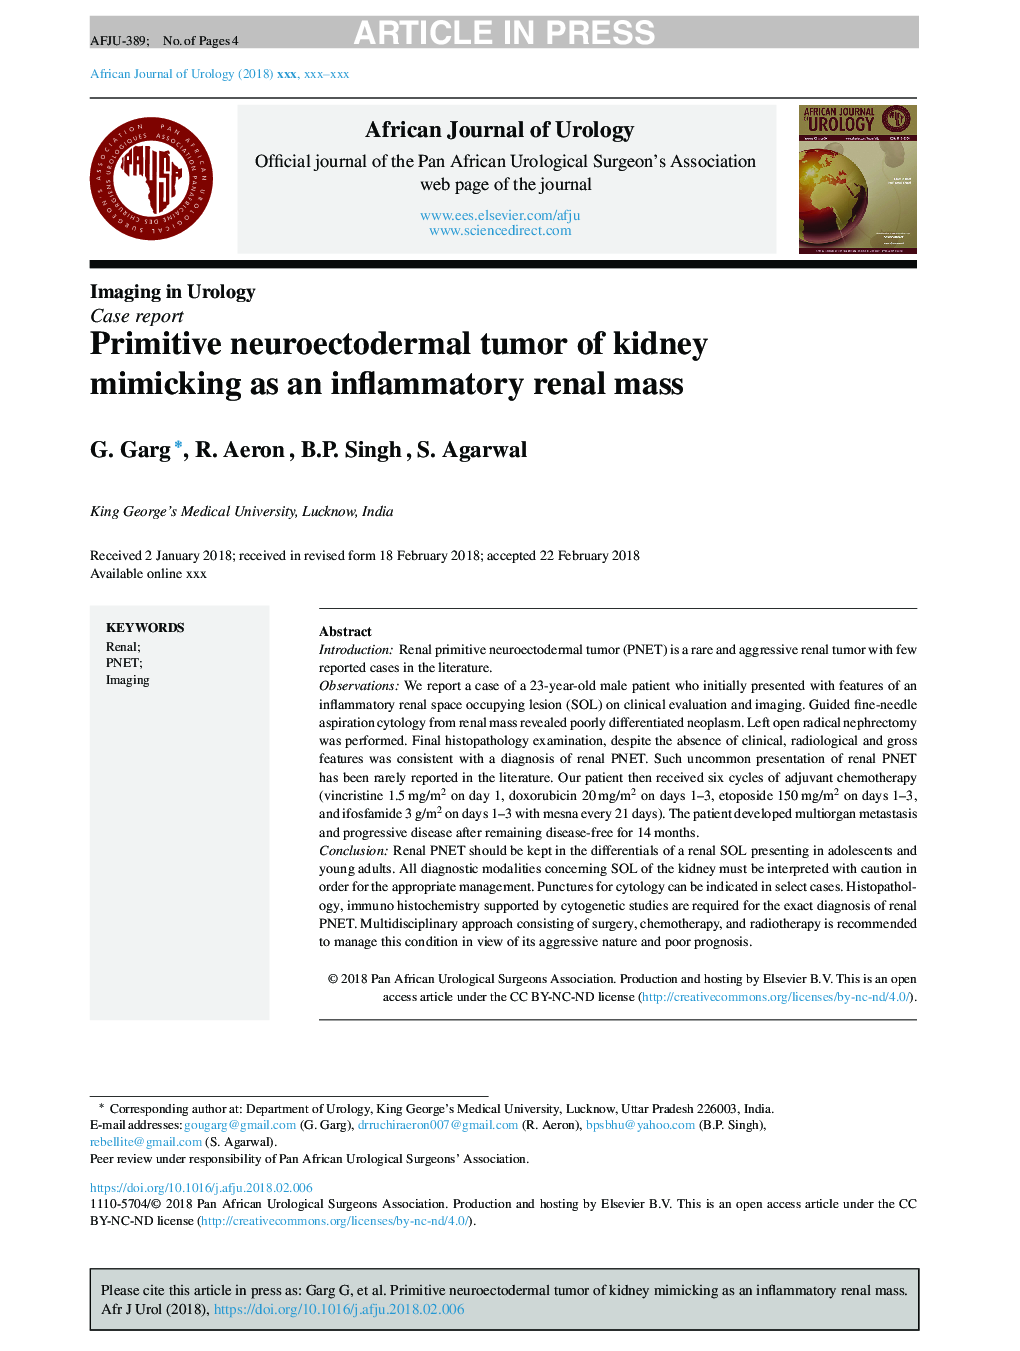 Primitive neuroectodermal tumor of kidney mimicking as an inflammatory renal mass